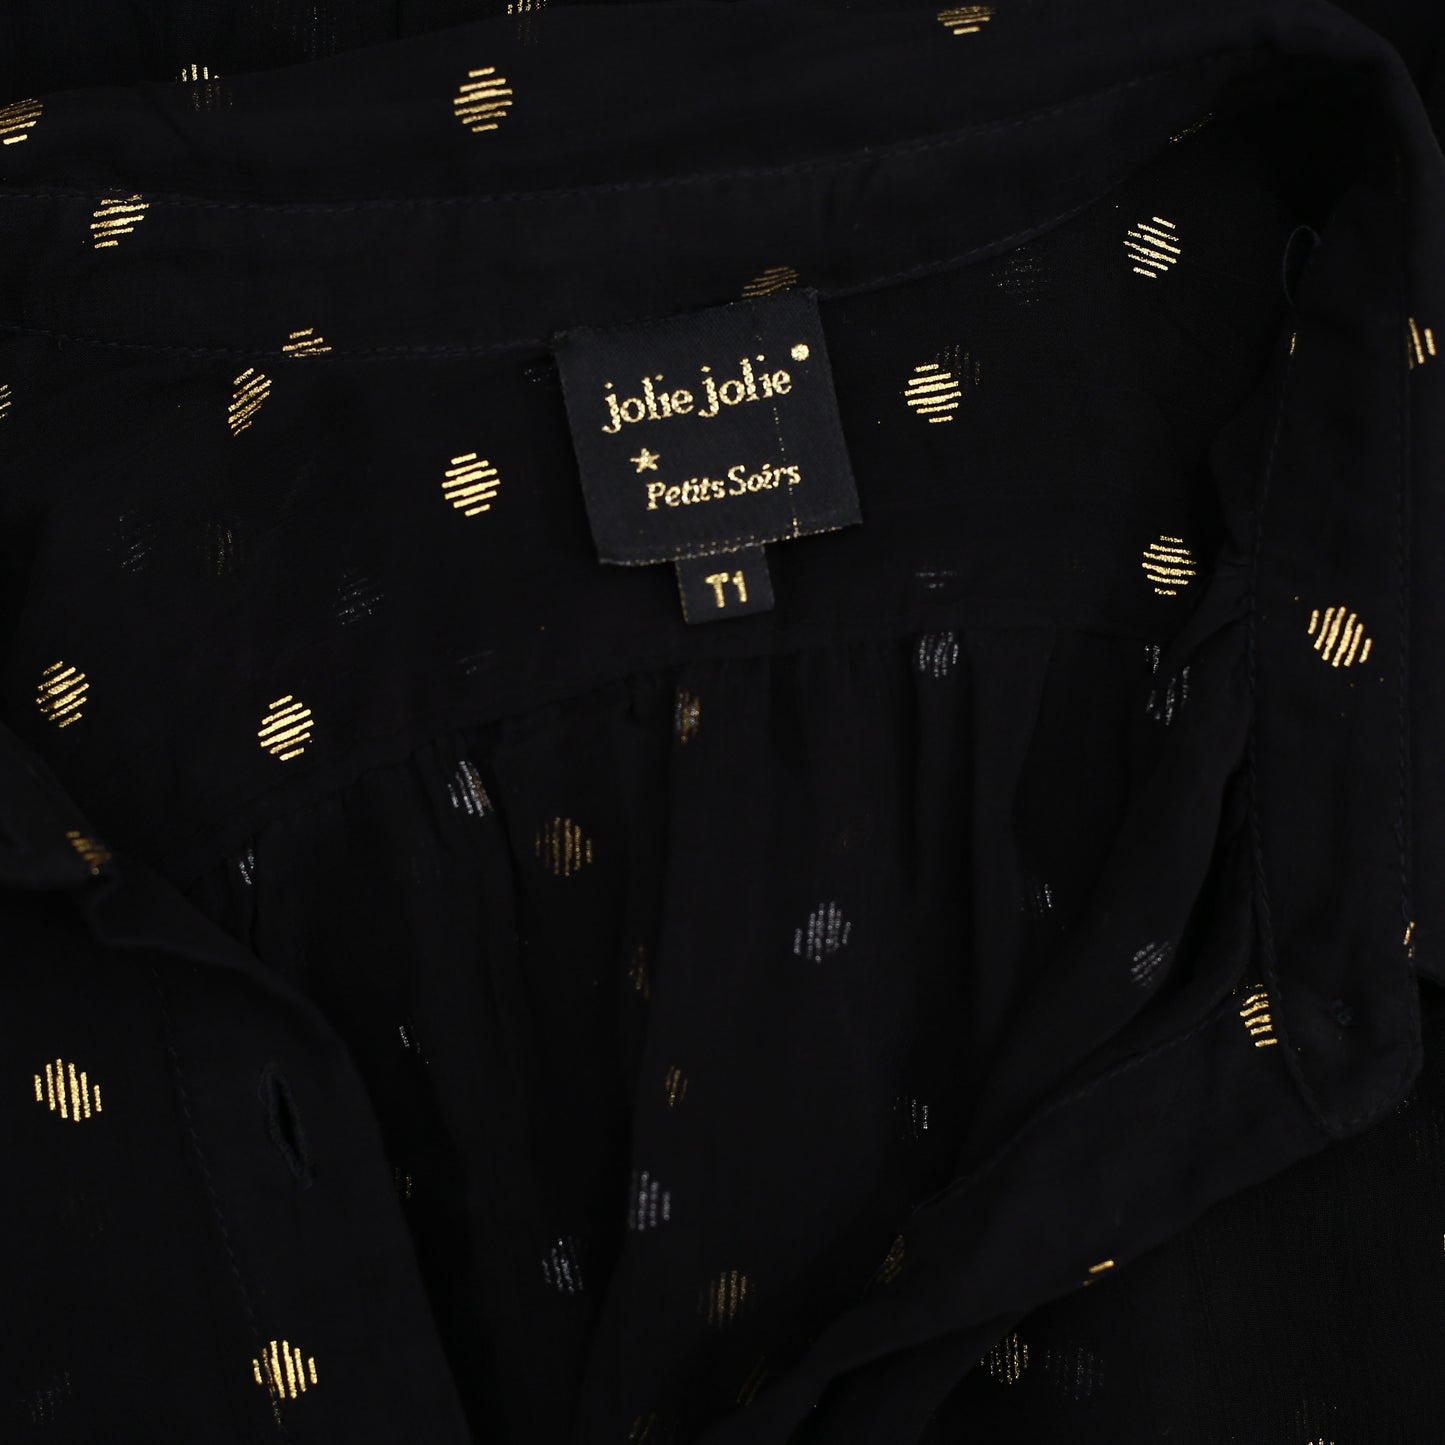 Petite Mendigote Paris Shimmer Black Shirt Tunic Top